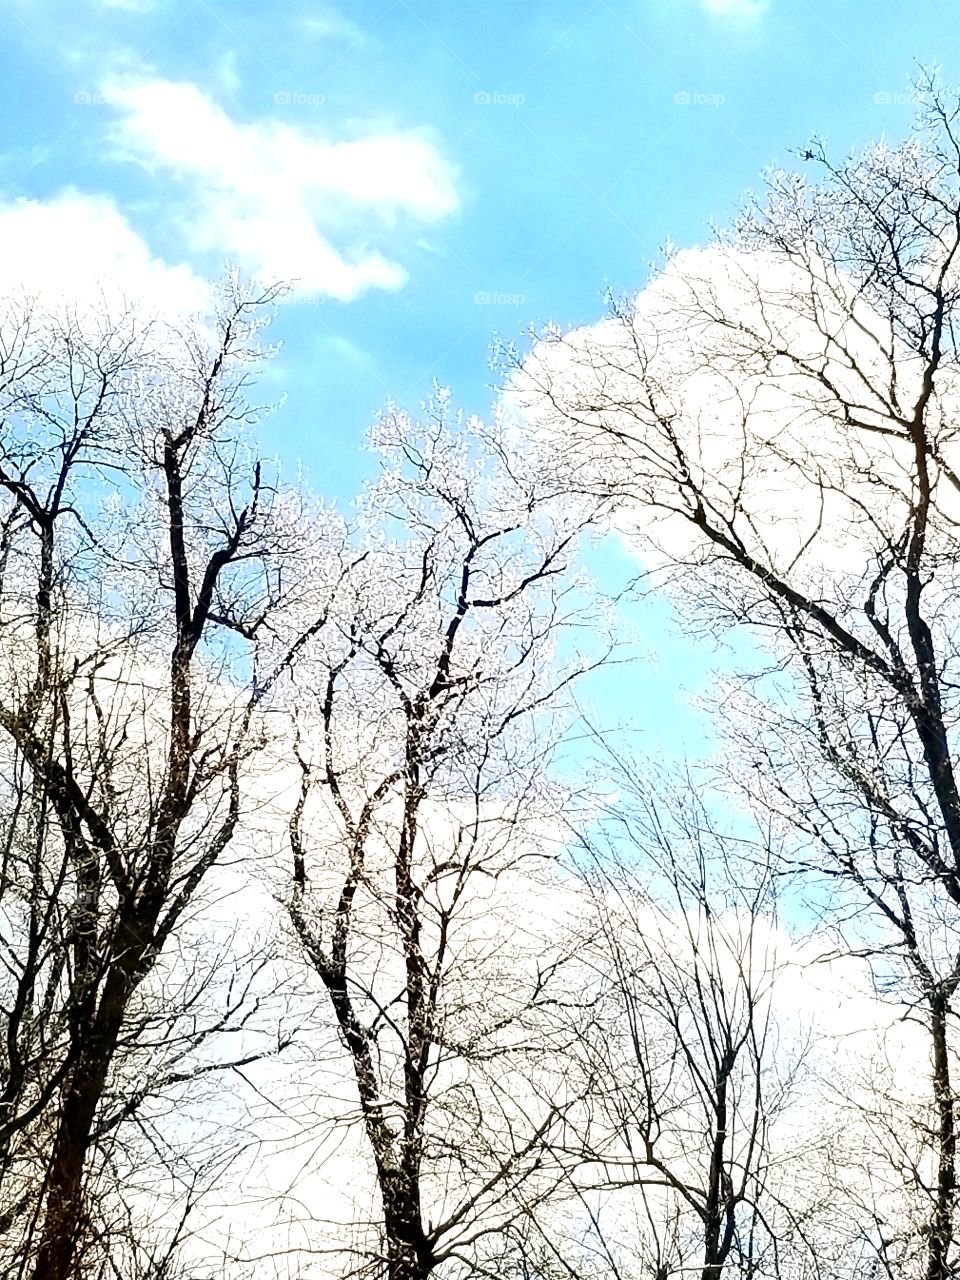 icy trees